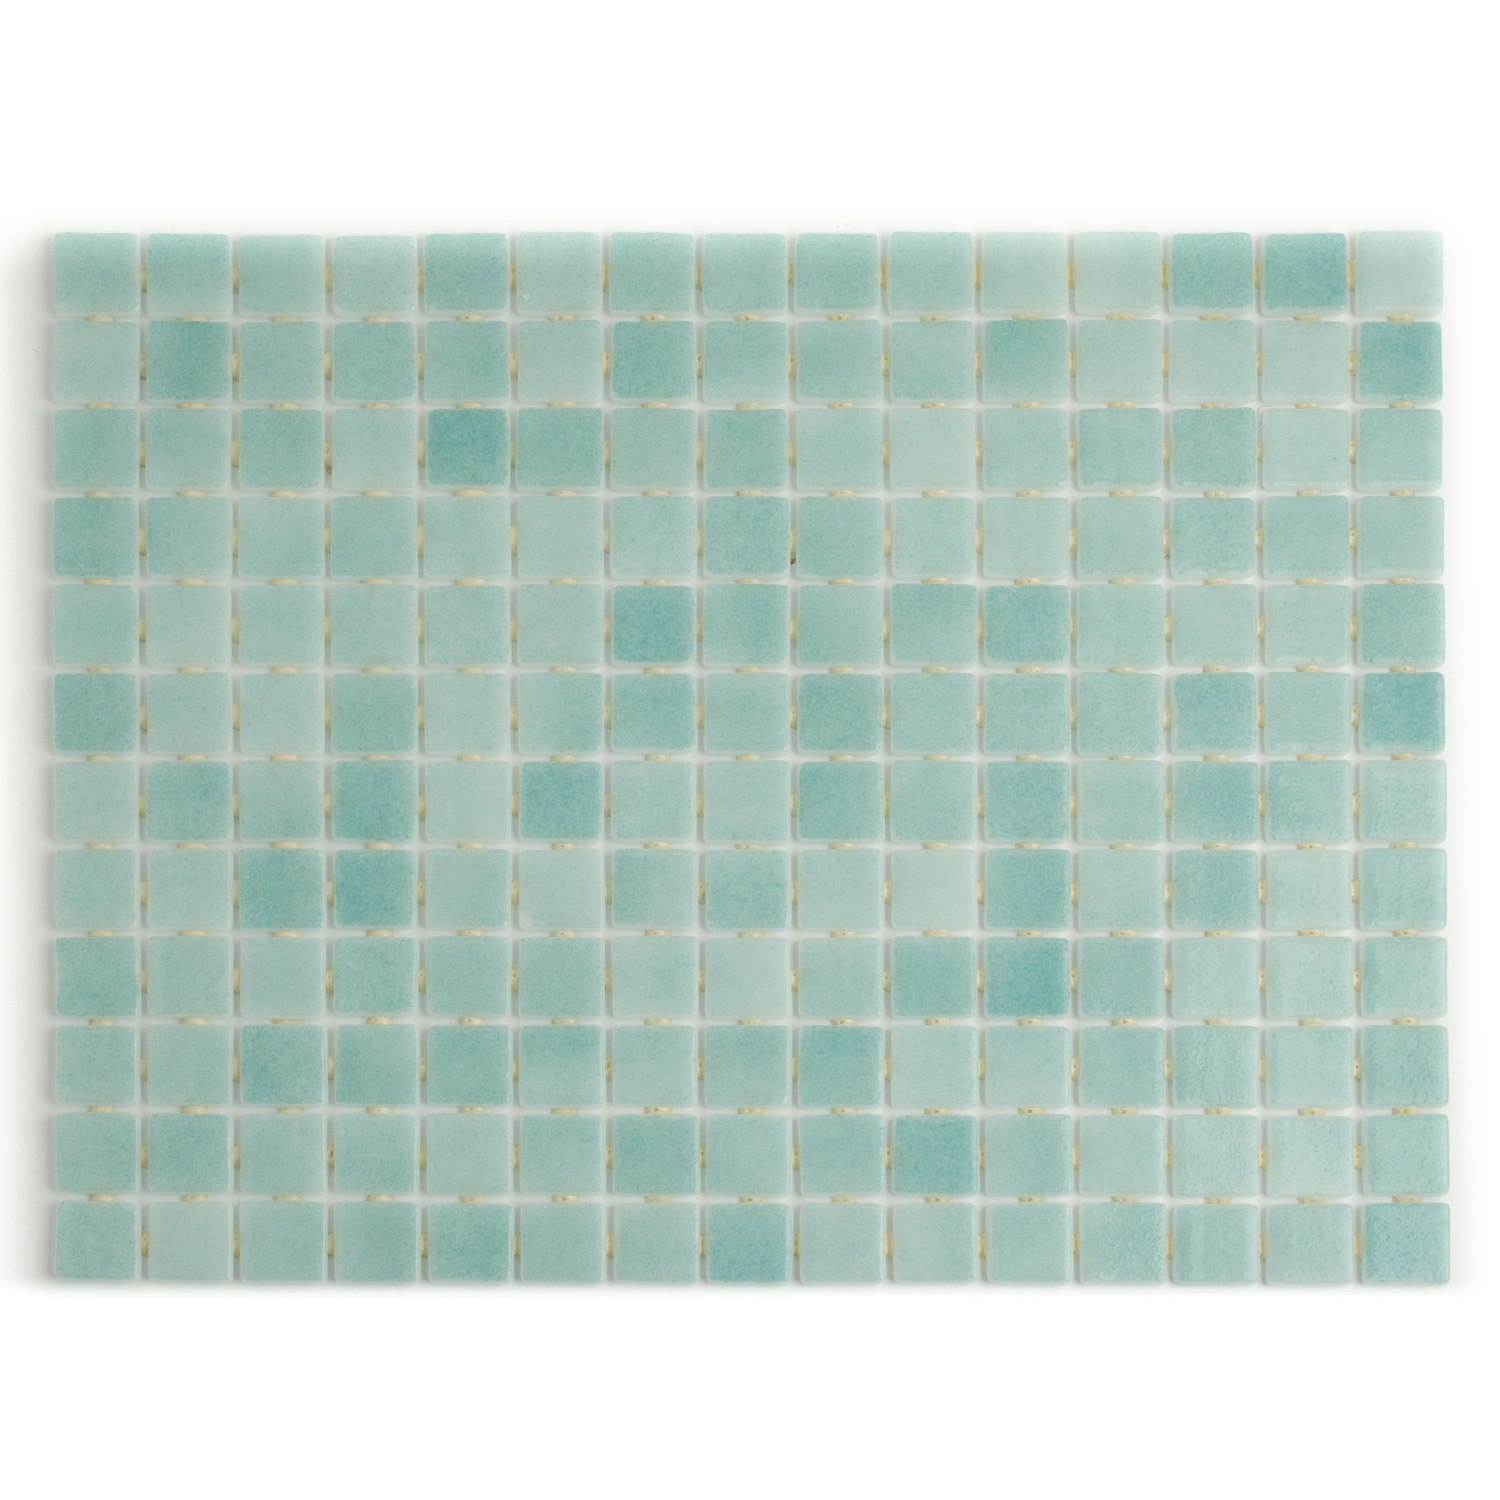 Piscina Mosaico Vidrio Mosaico Azul Verde Bianca